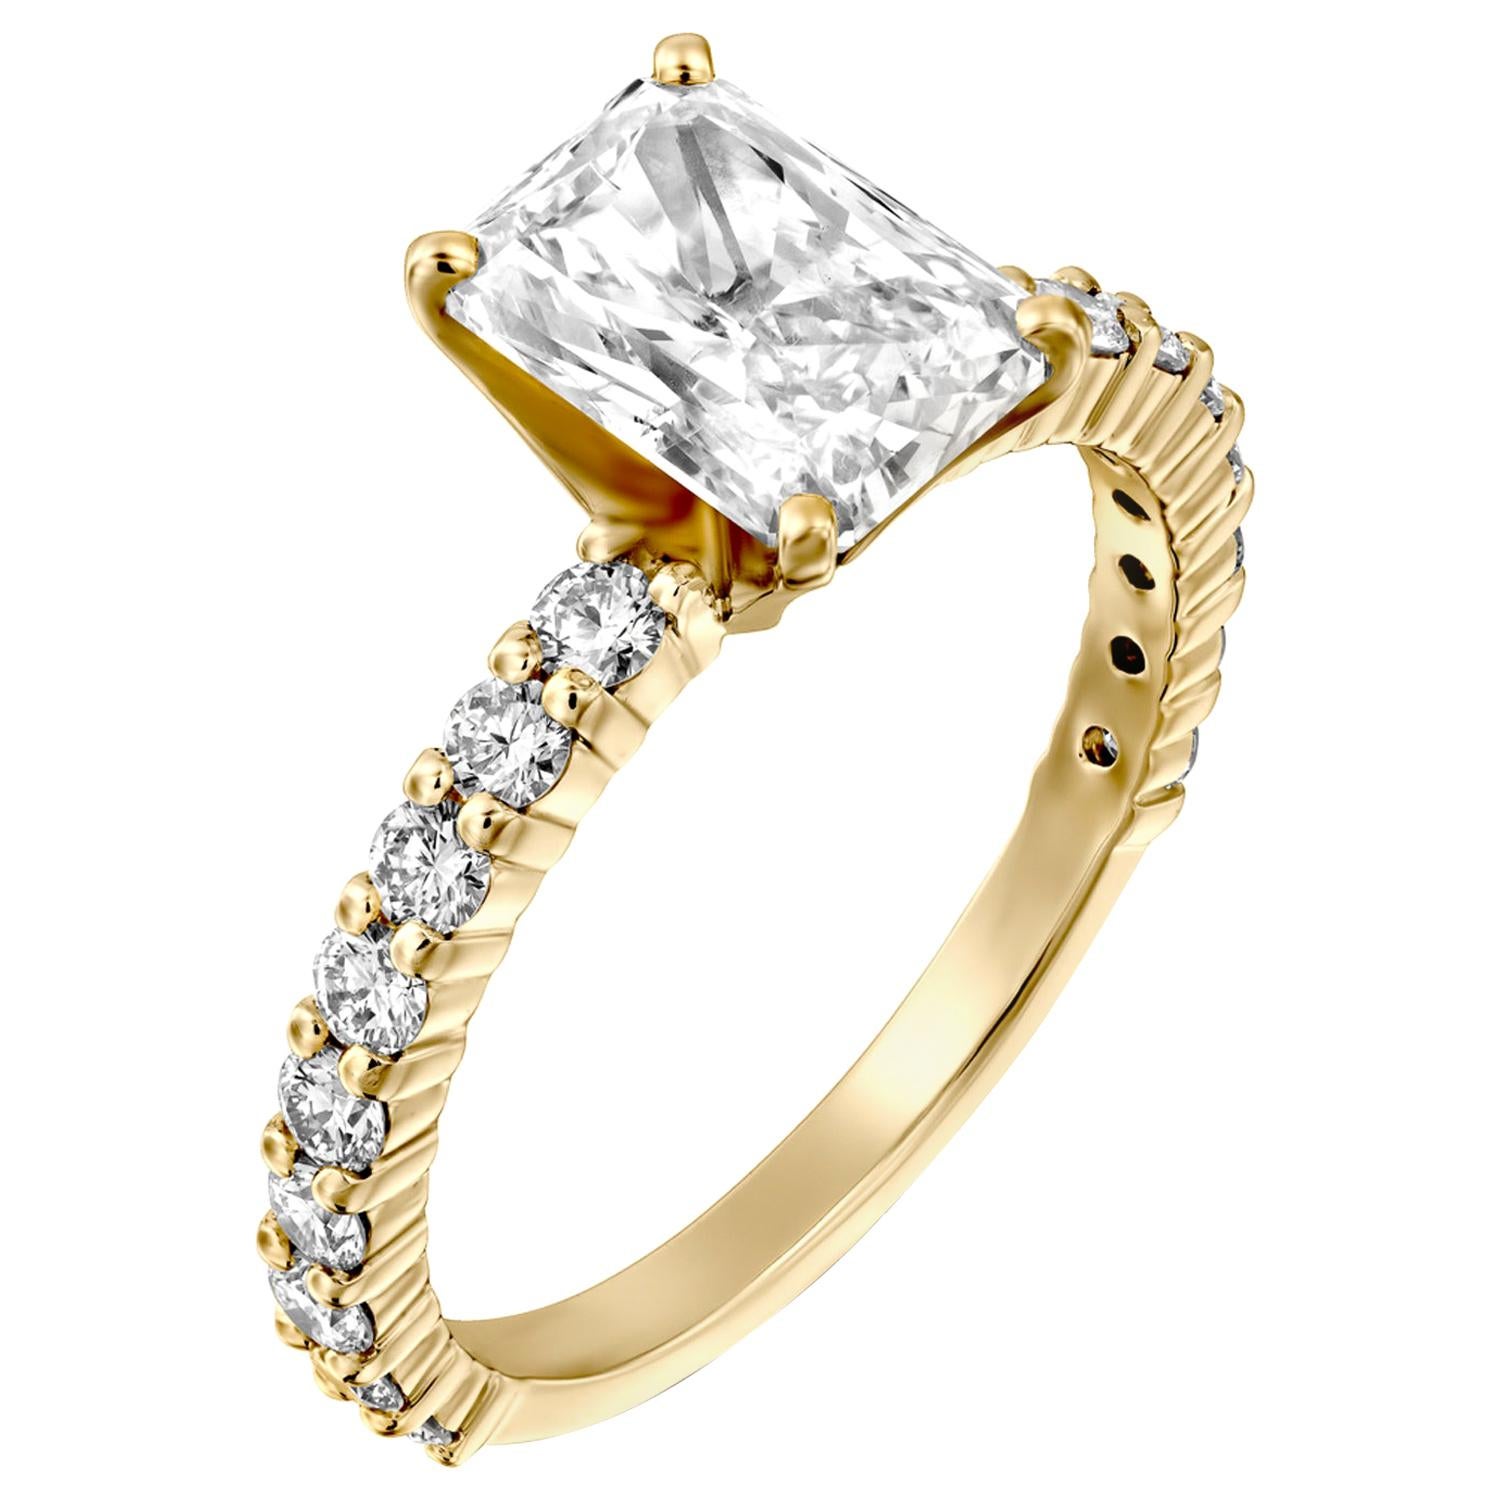 2.90 Carat Radiant Cut Diamond Ring, 18 Karat Yellow Gold Classic Ring